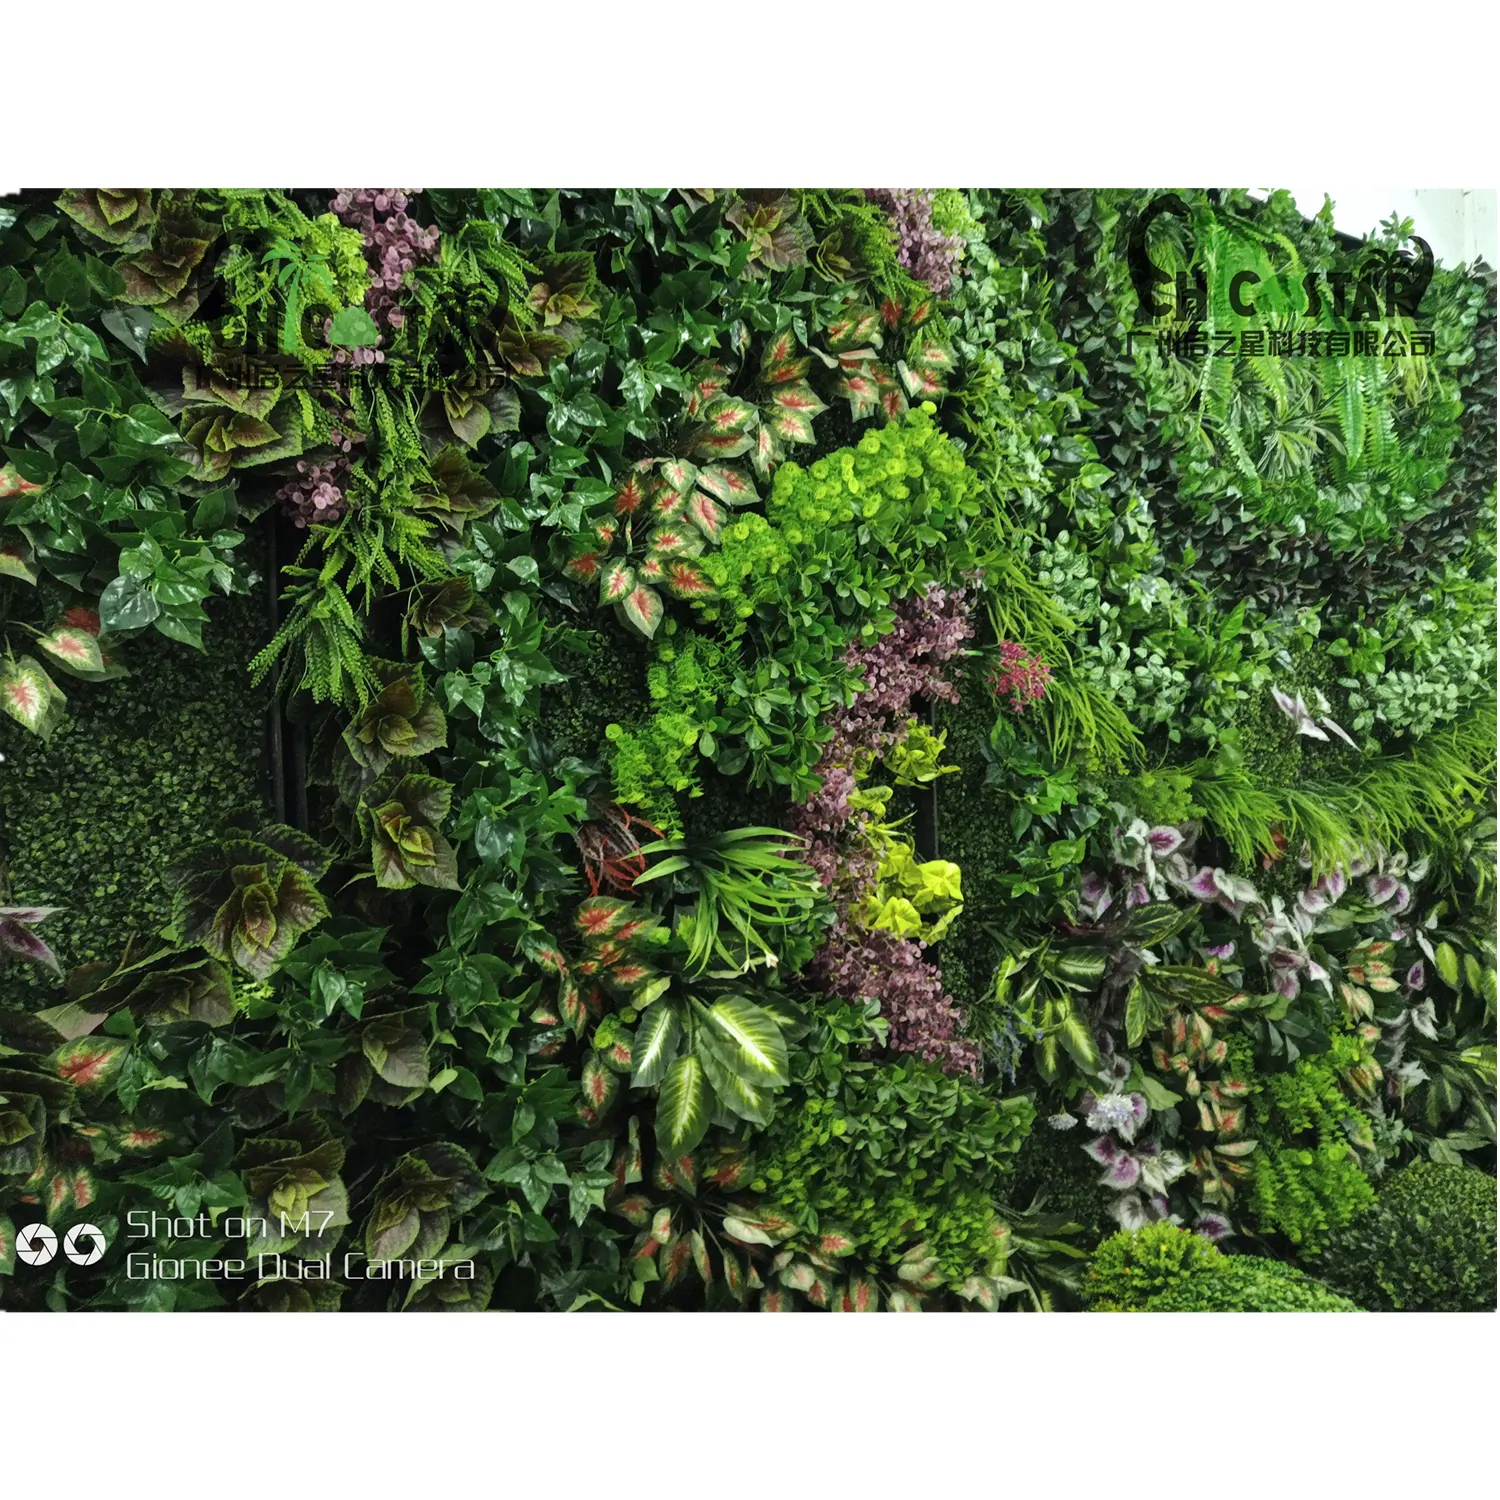 Factory direct customizable artificial indoor outdoor plants living wall vertical green wall for garden